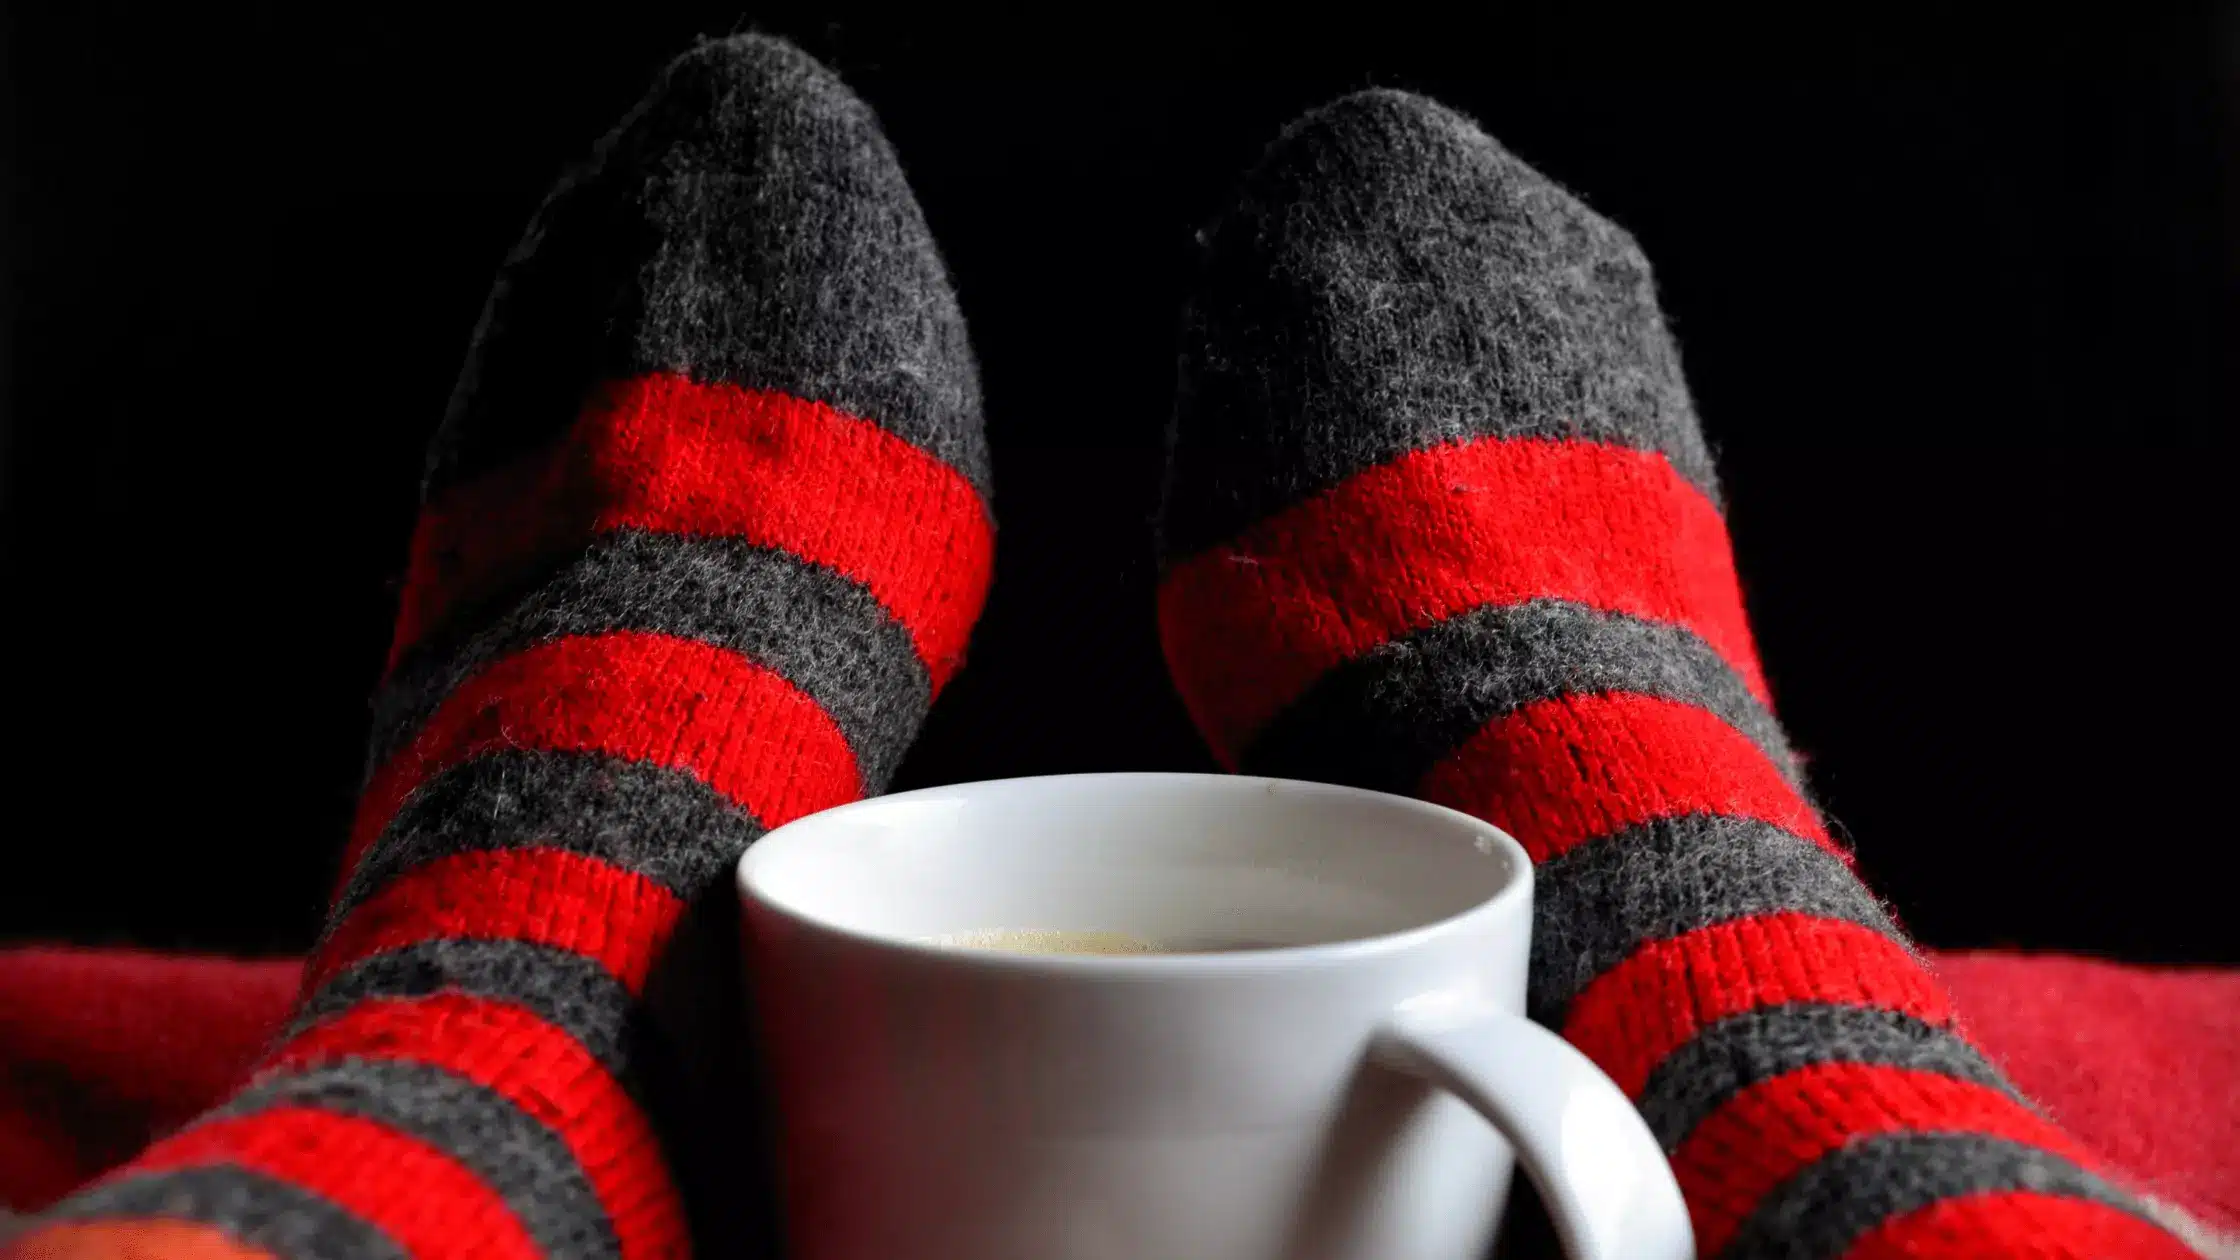 Warm socks on feet with a coffee mug between them